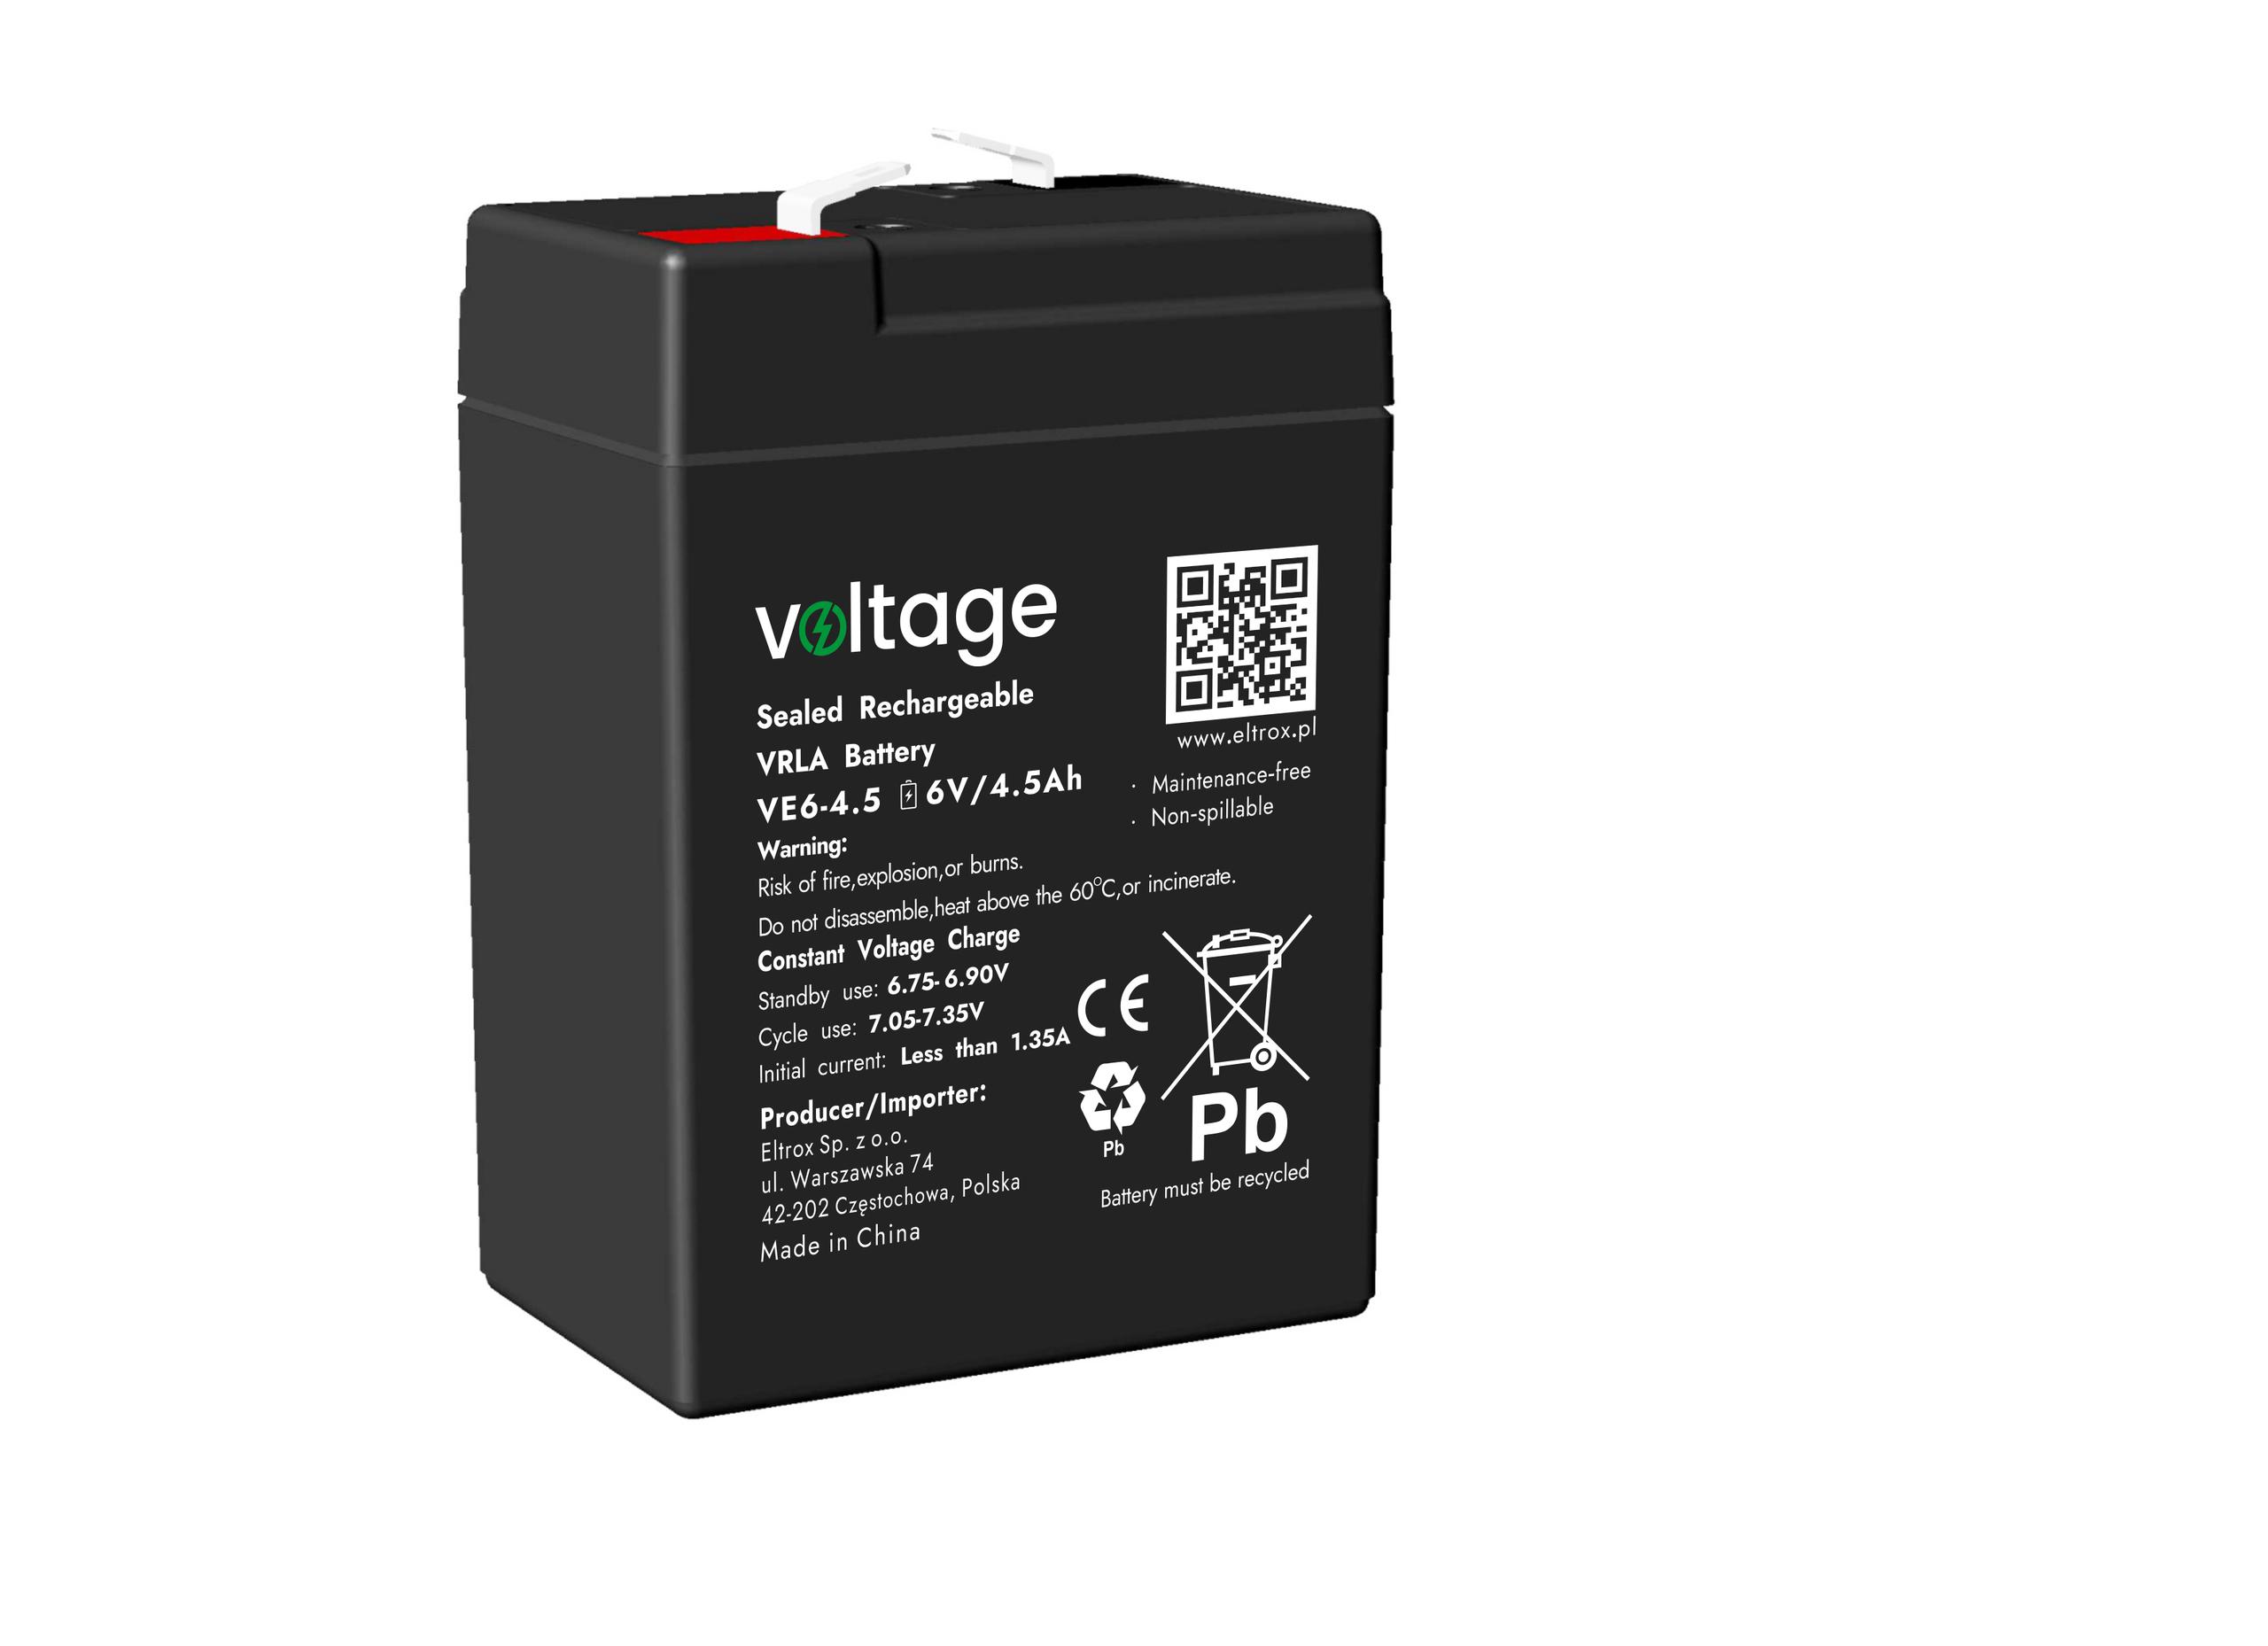 Akumulator AGM Voltage 6V 4.5Ah VE6-4.5 - najważniejsze cechy: